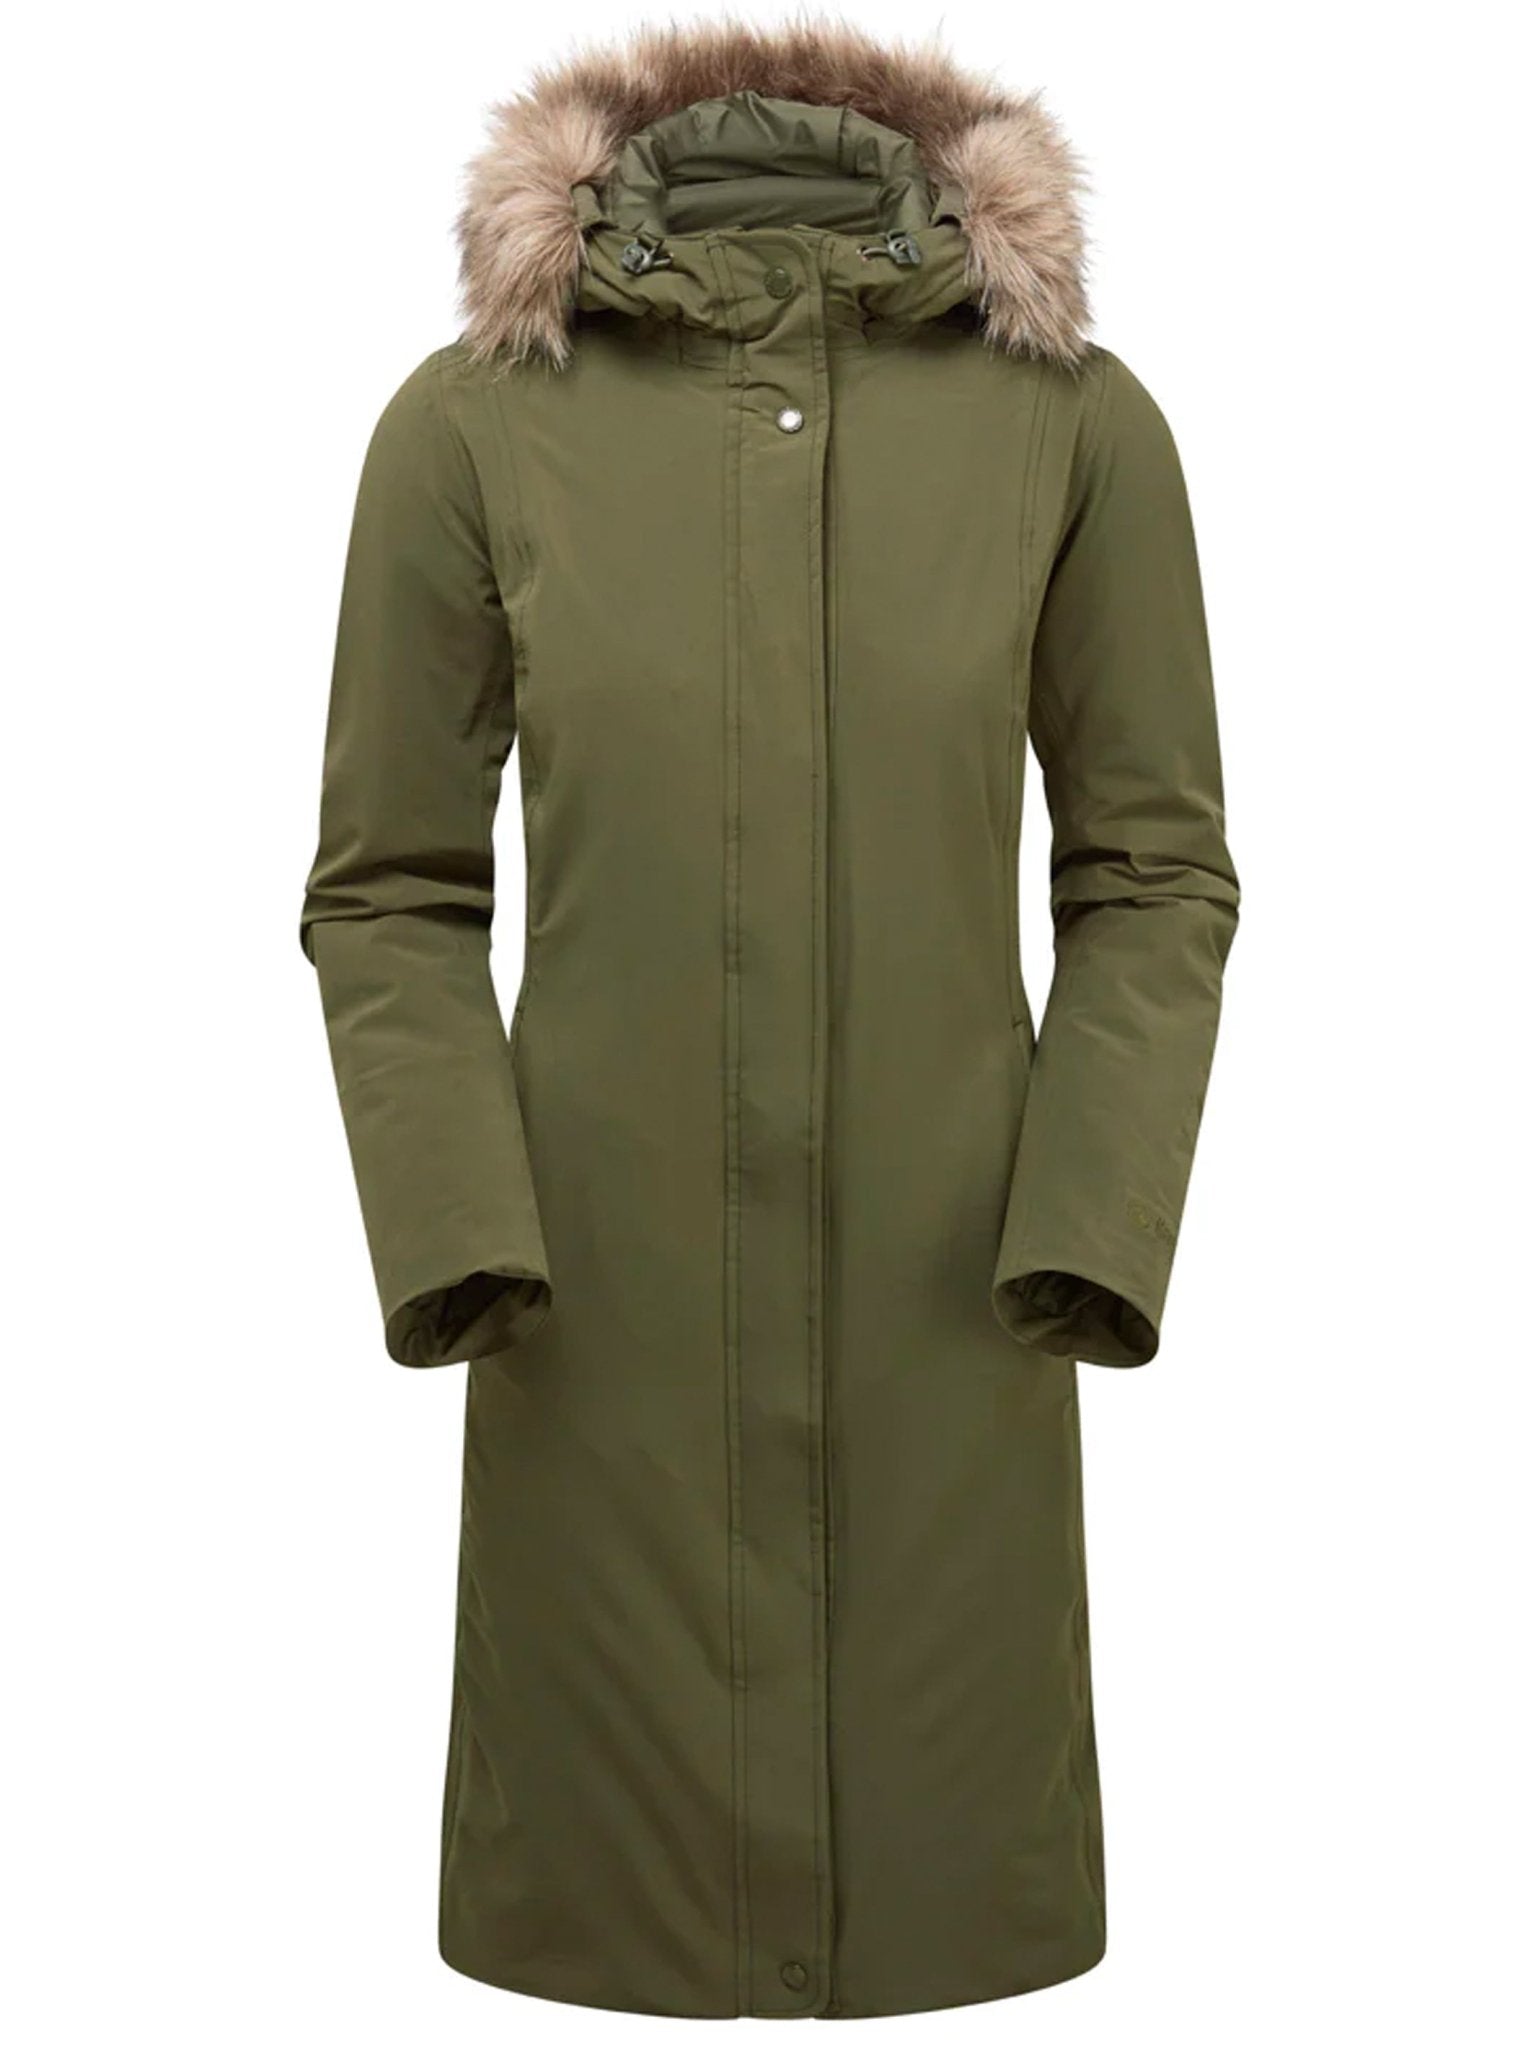 4elementsclothingKeelaKeela Outdoors - Keela Crofter Parka Long ladies coat 3/4 length waterproof windproof jacketOuterwear